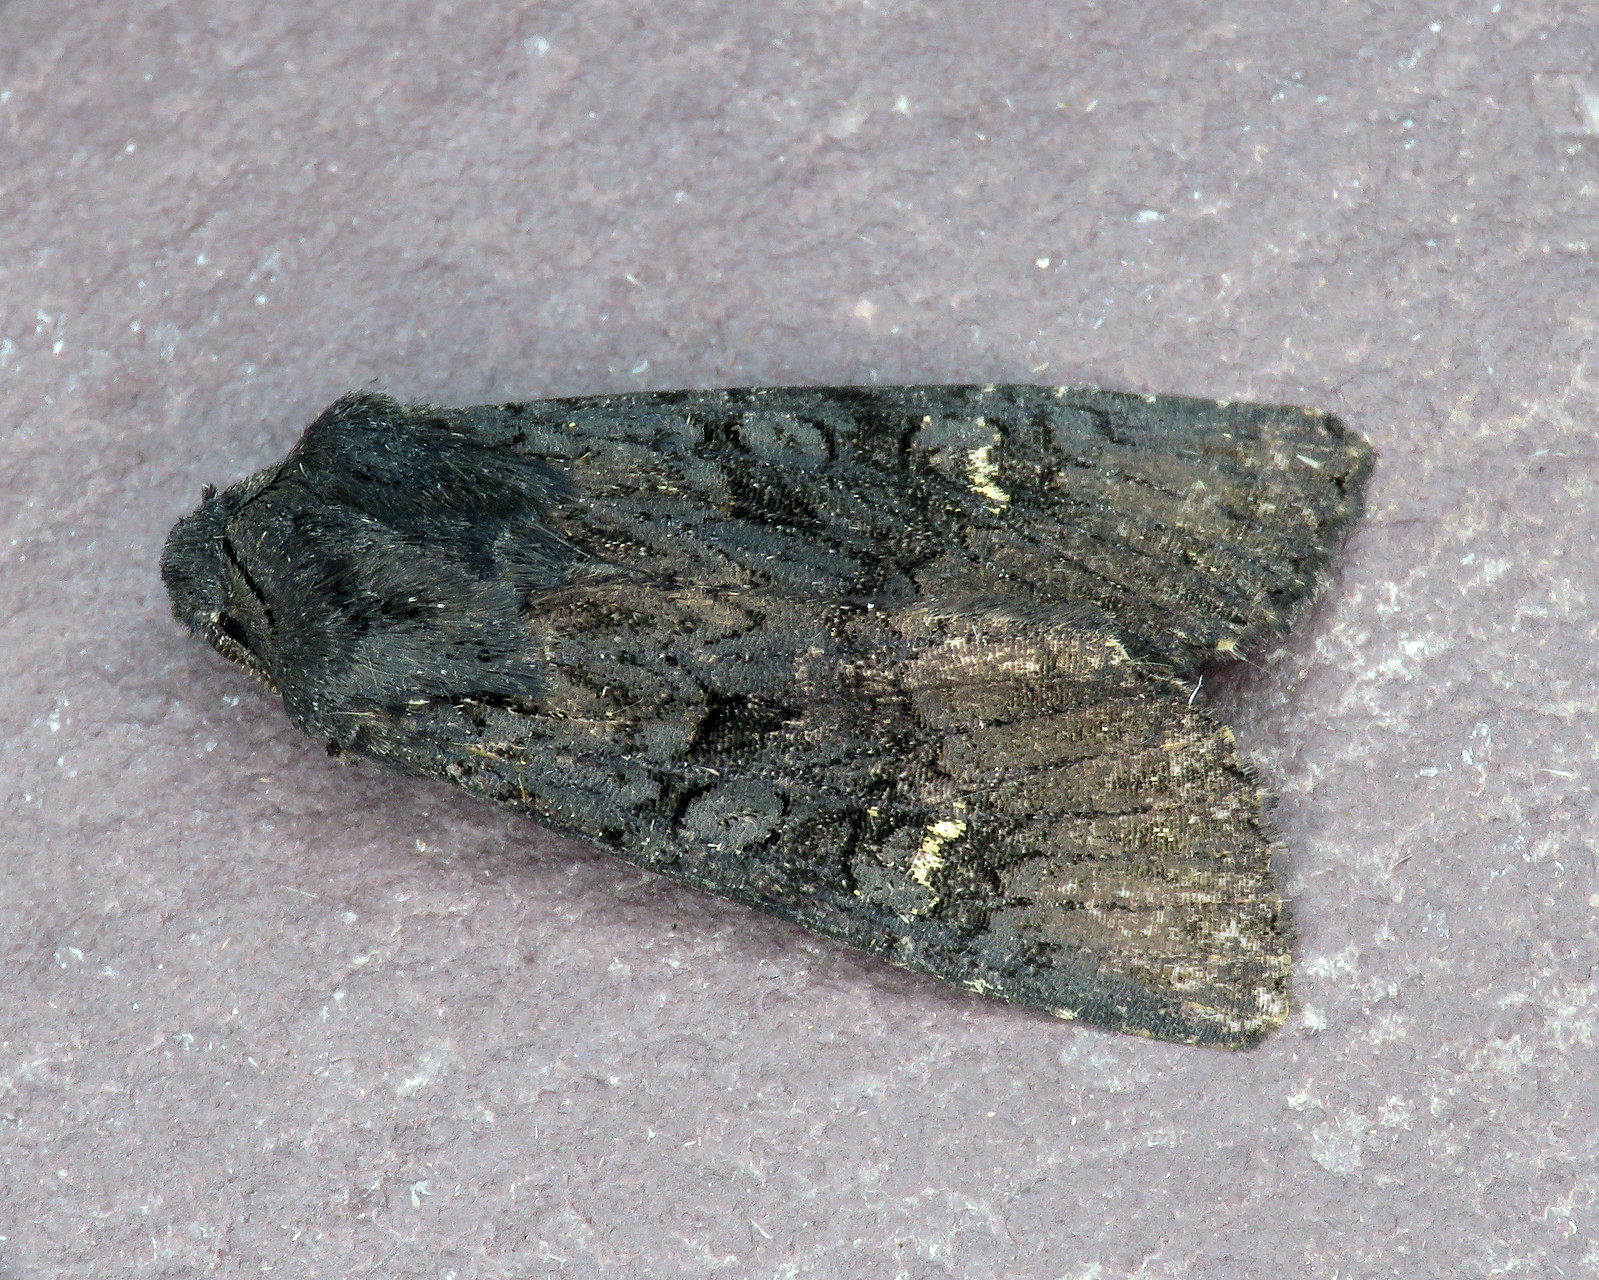 73.233 Black Rustic - Aporophyla nigra